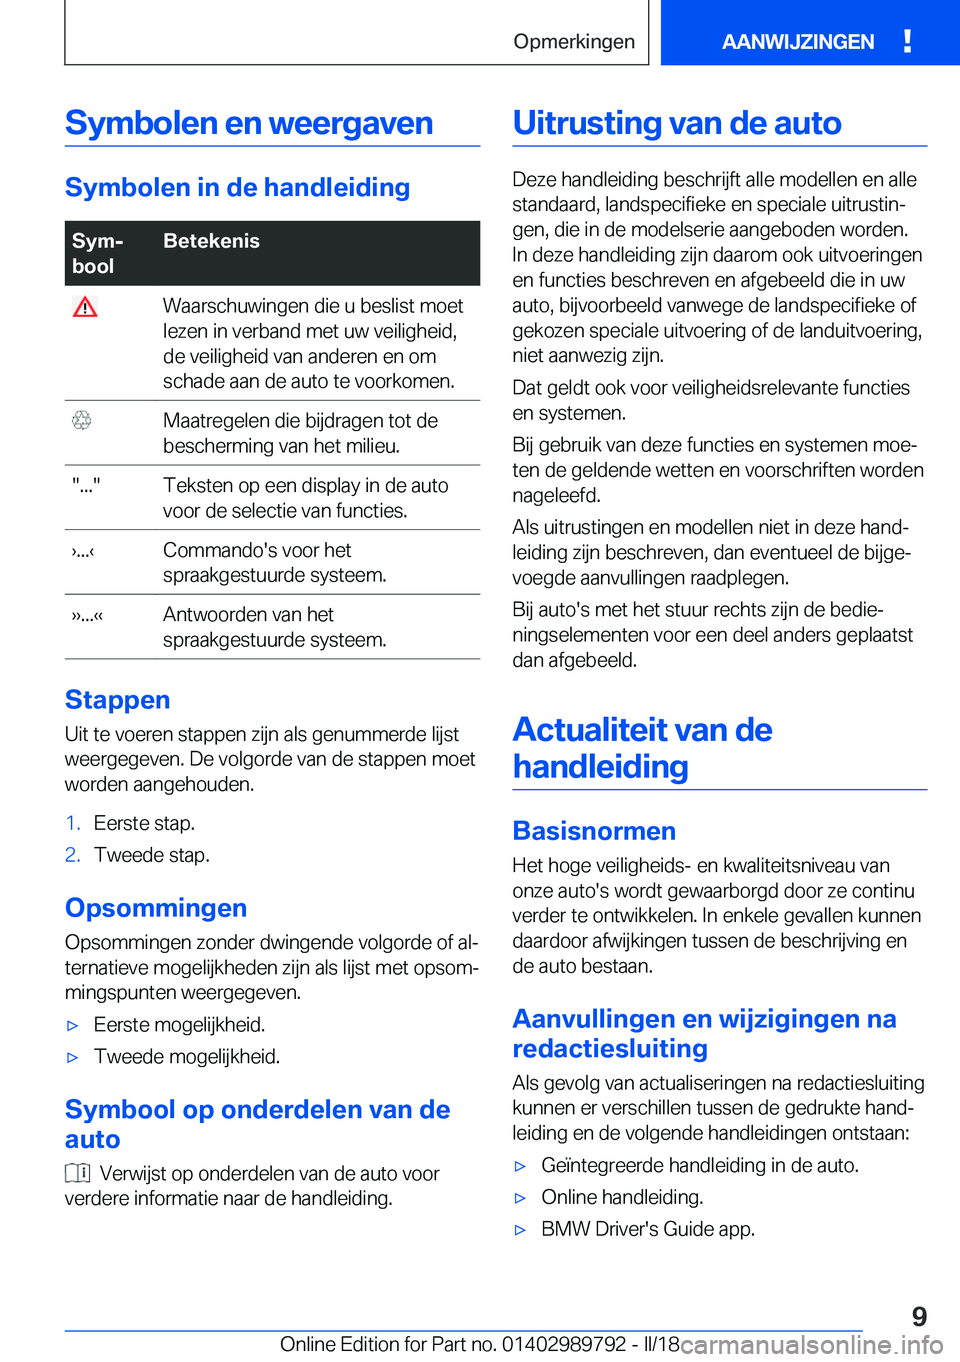 BMW M5 2018  Instructieboekjes (in Dutch) �S�y�m�b�o�l�e�n��e�n��w�e�e�r�g�a�v�e�n
�S�y�m�b�o�l�e�n��i�n��d�e��h�a�n�d�l�e�i�d�i�n�g
�S�y�mj
�b�o�o�l�B�e�t�e�k�e�n�i�s� �W�a�a�r�s�c�h�u�w�i�n�g�e�n� �d�i�e� �u� �b�e�s�l�i�s�t� �m�o�e�t
